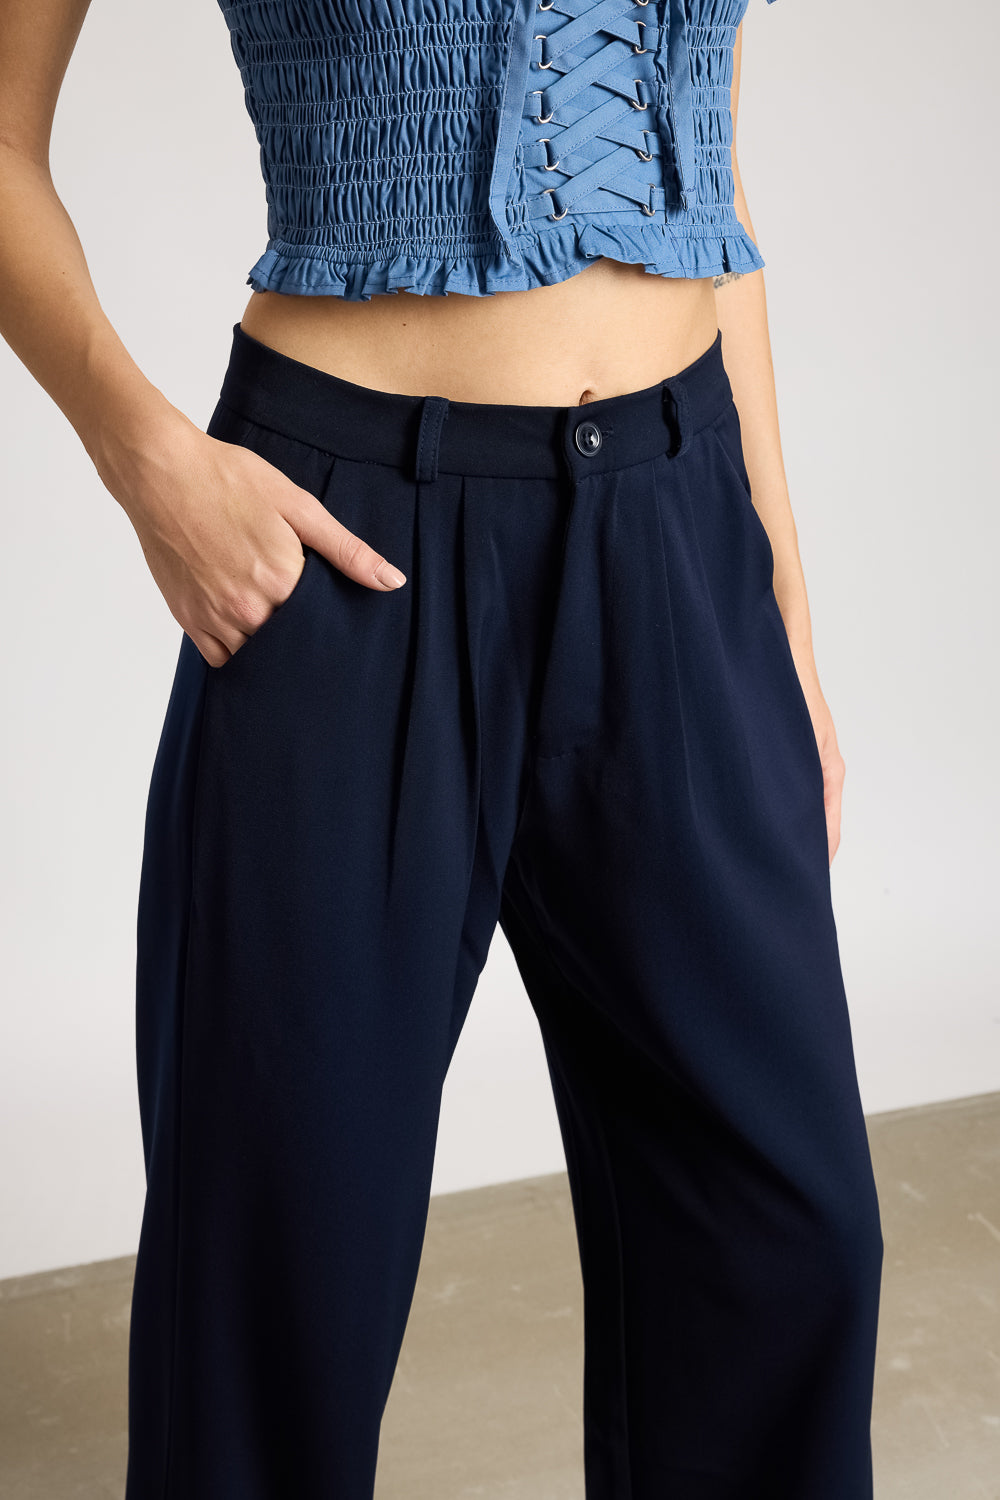 Women's Pleated Navy Blue Korean Pant